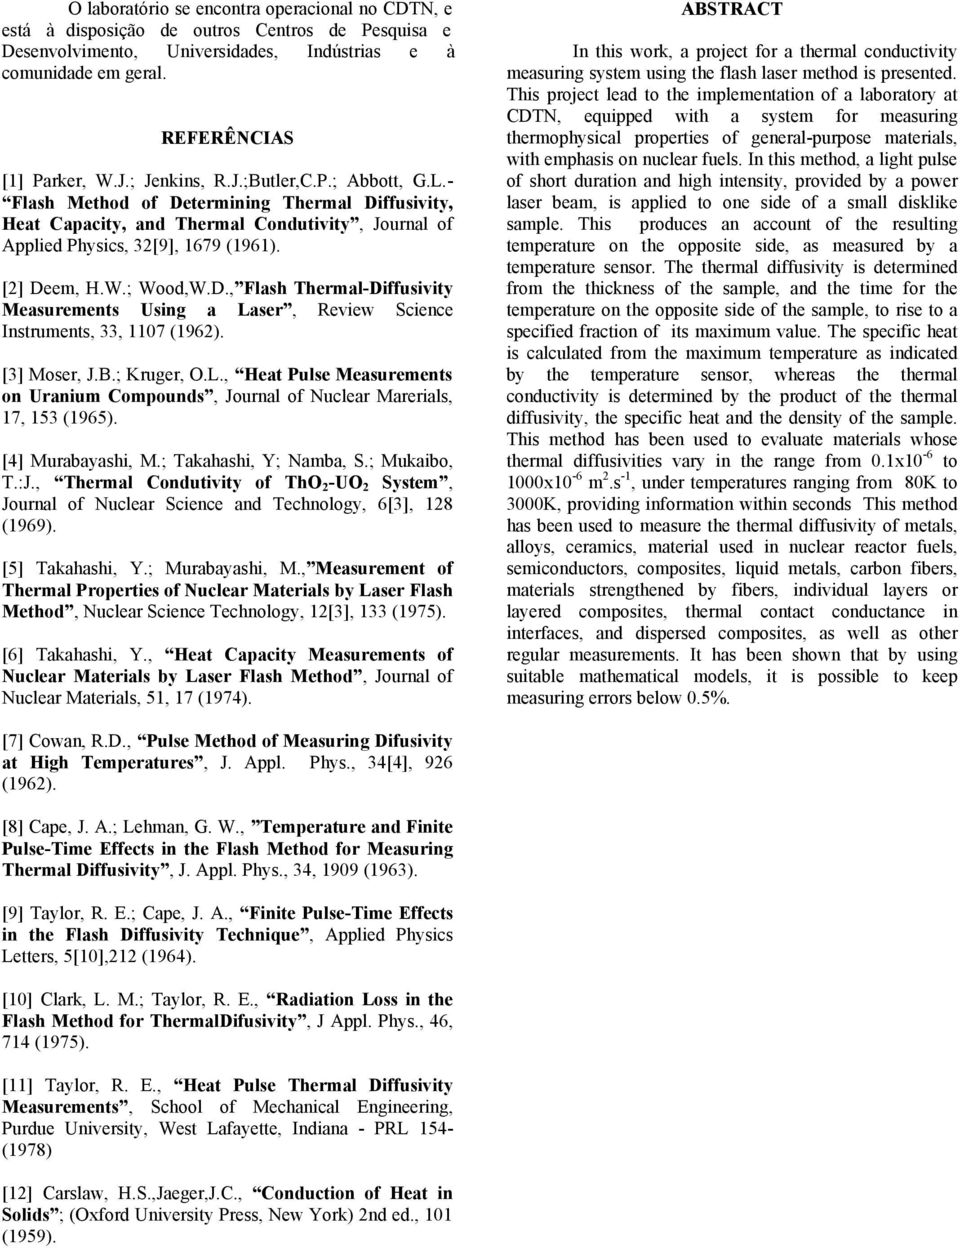 [3] Moser, J.B.; Kruger, O.., Heat Pulse Measurements on Uranium Compounds, Journal of Nuclear Marerials, 7, 53 (965). [4] Murabayashi, M.; Takahashi, Y; Namba, S.; Mukaibo, T.:J.